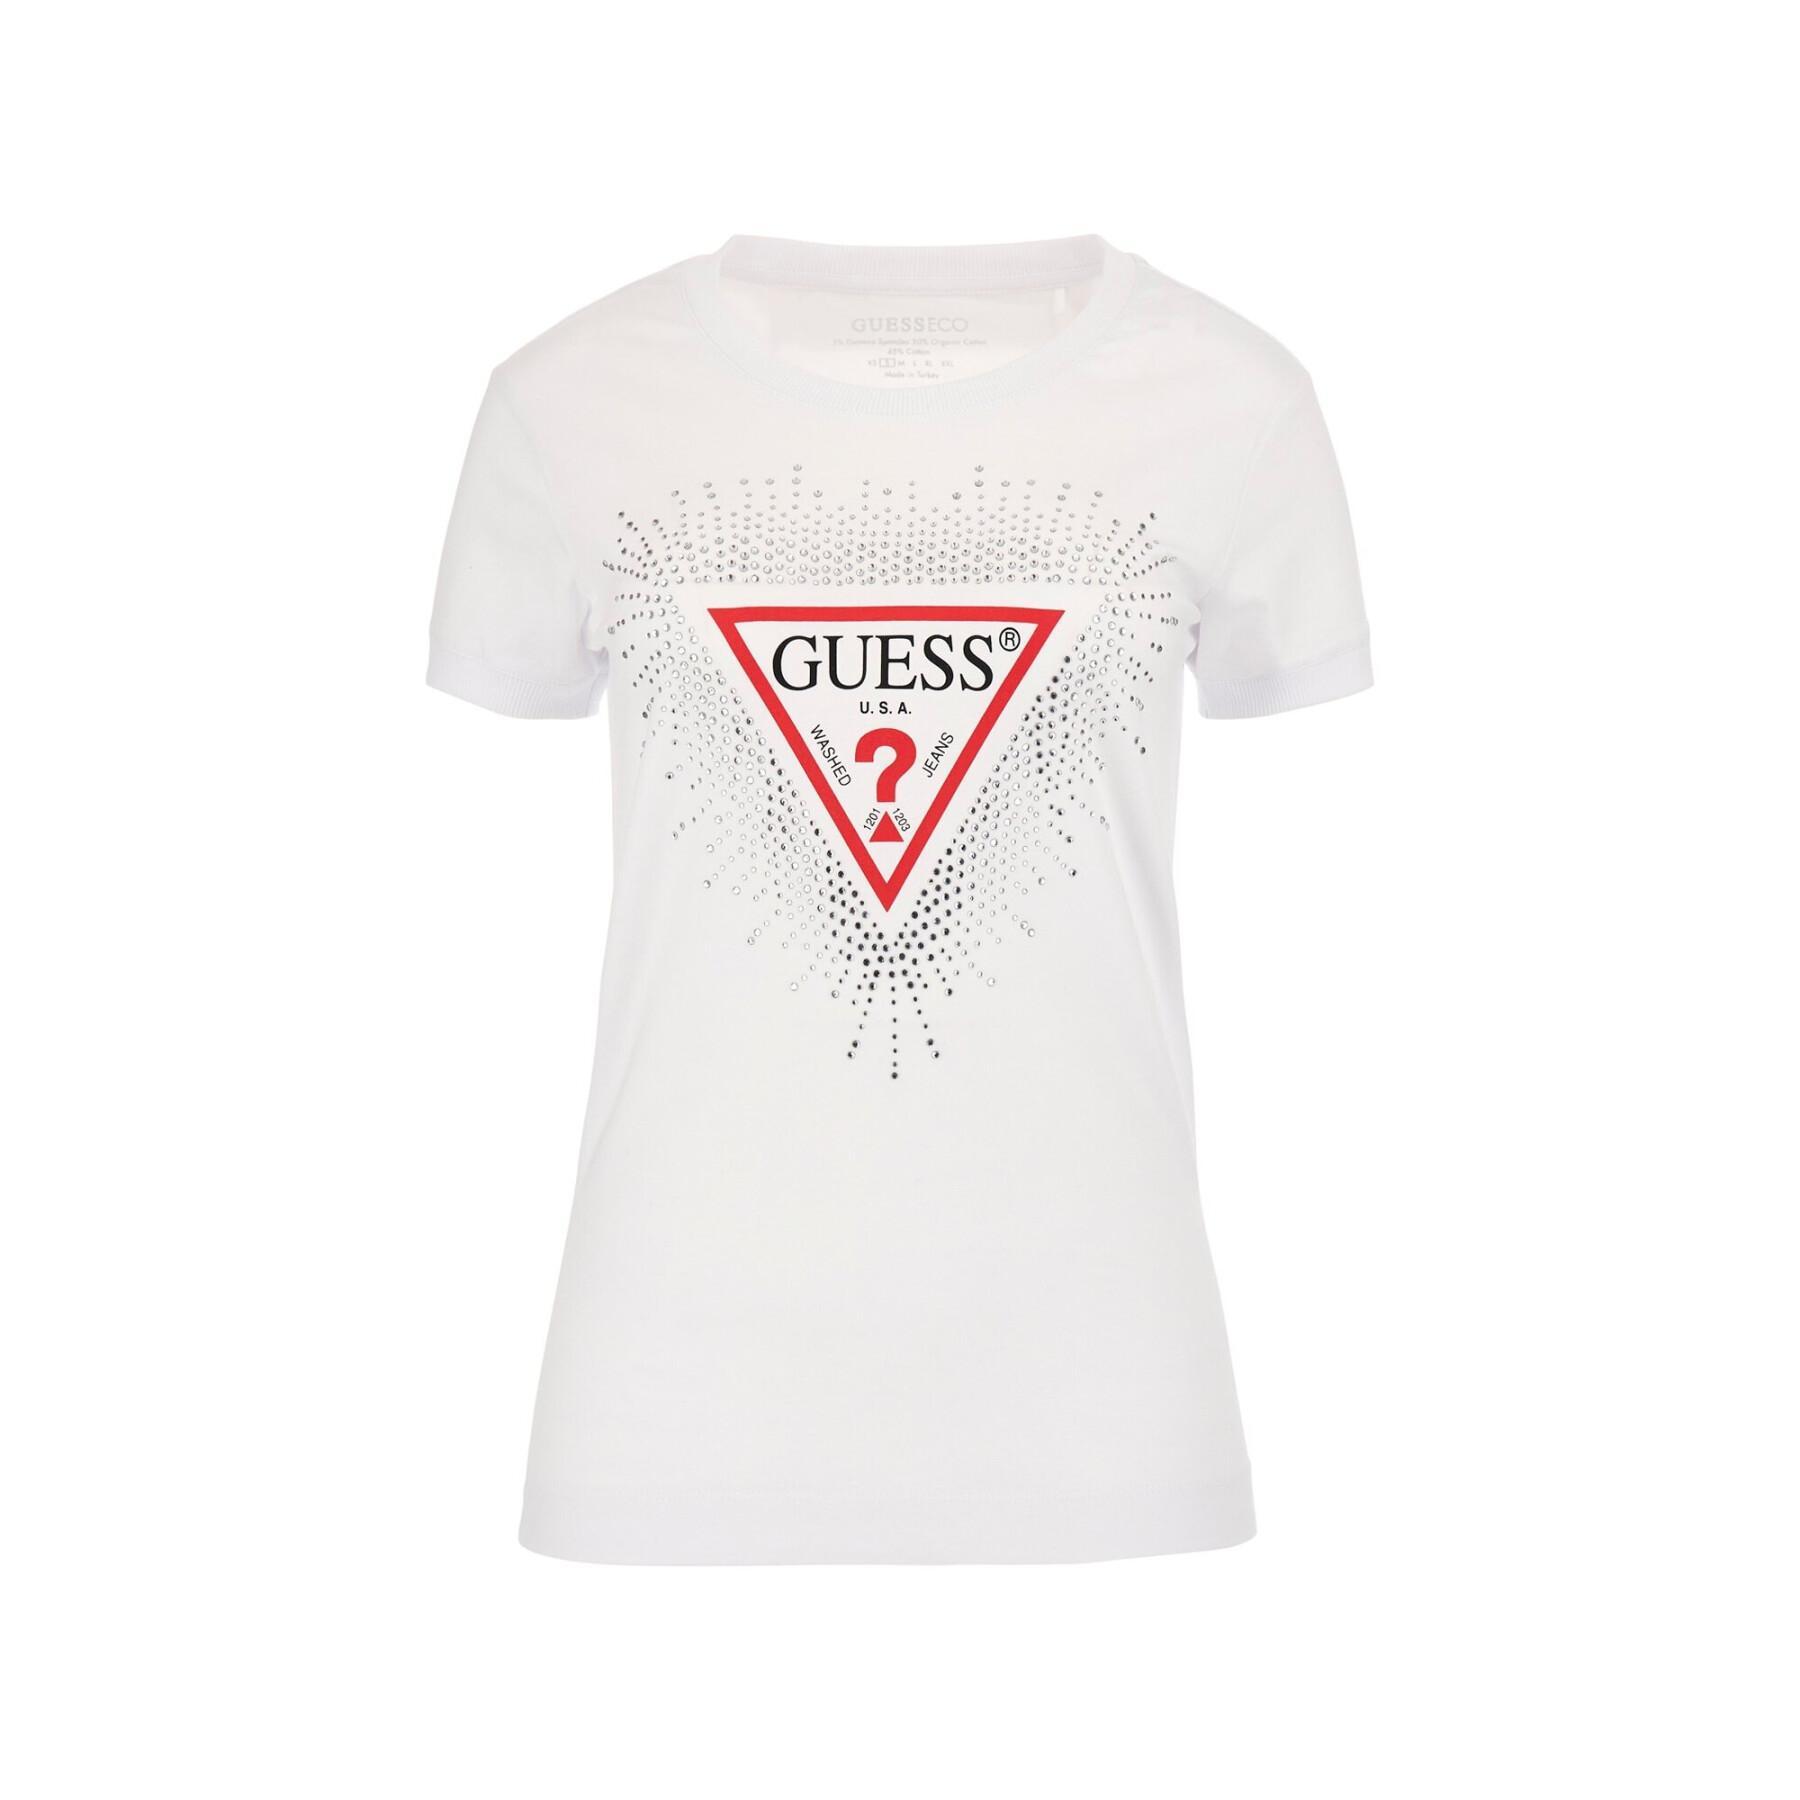 T-shirt femme Guess Star Triangle